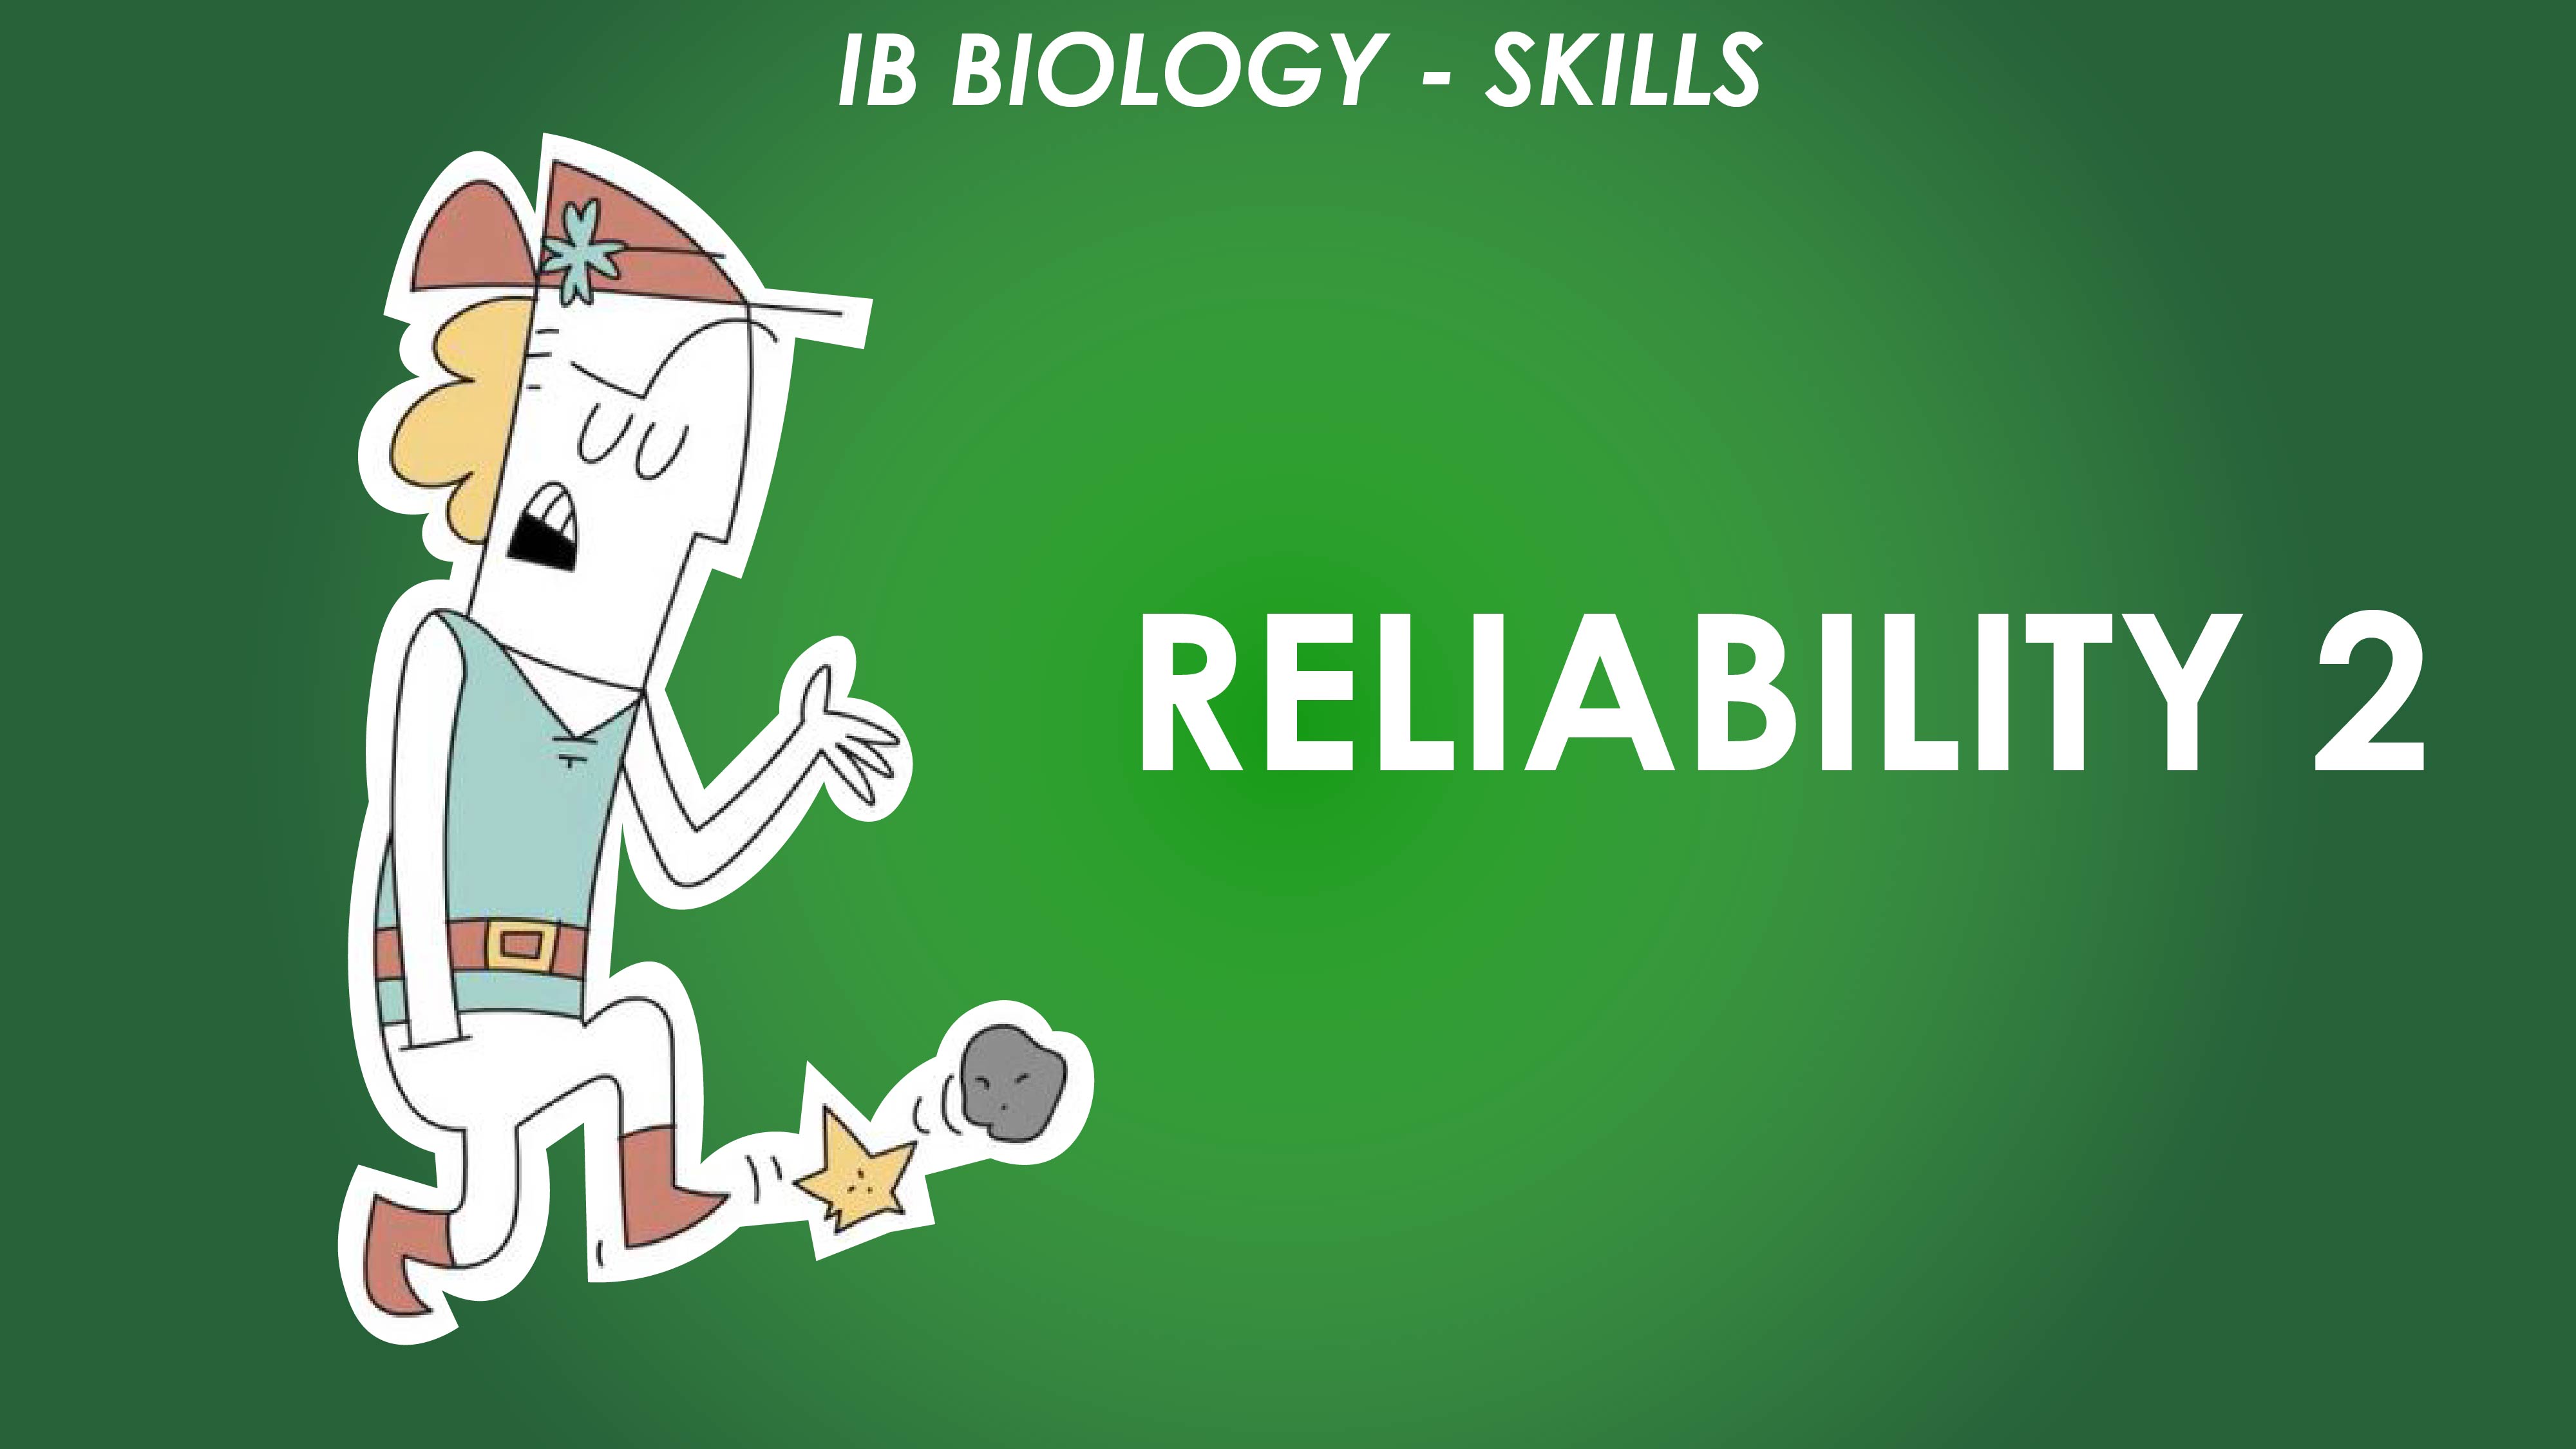 Reliability 2 - IB Biology Skills